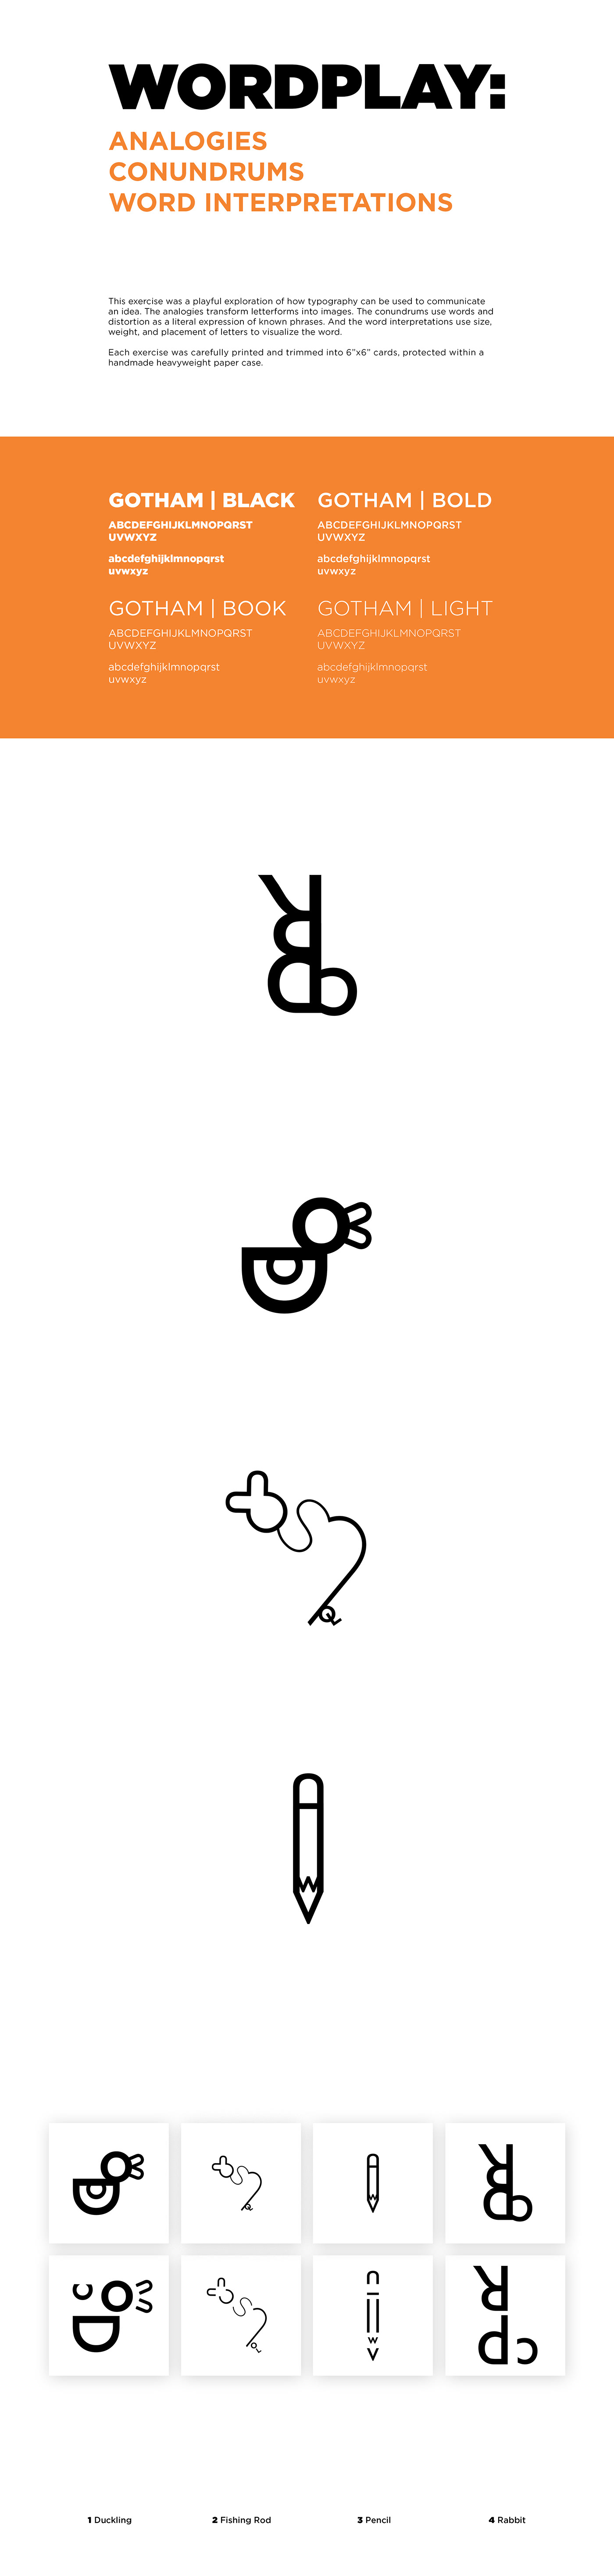 type typography   Wordplay analogy Digital Art  gotham graphic design  letterforms Playful type design